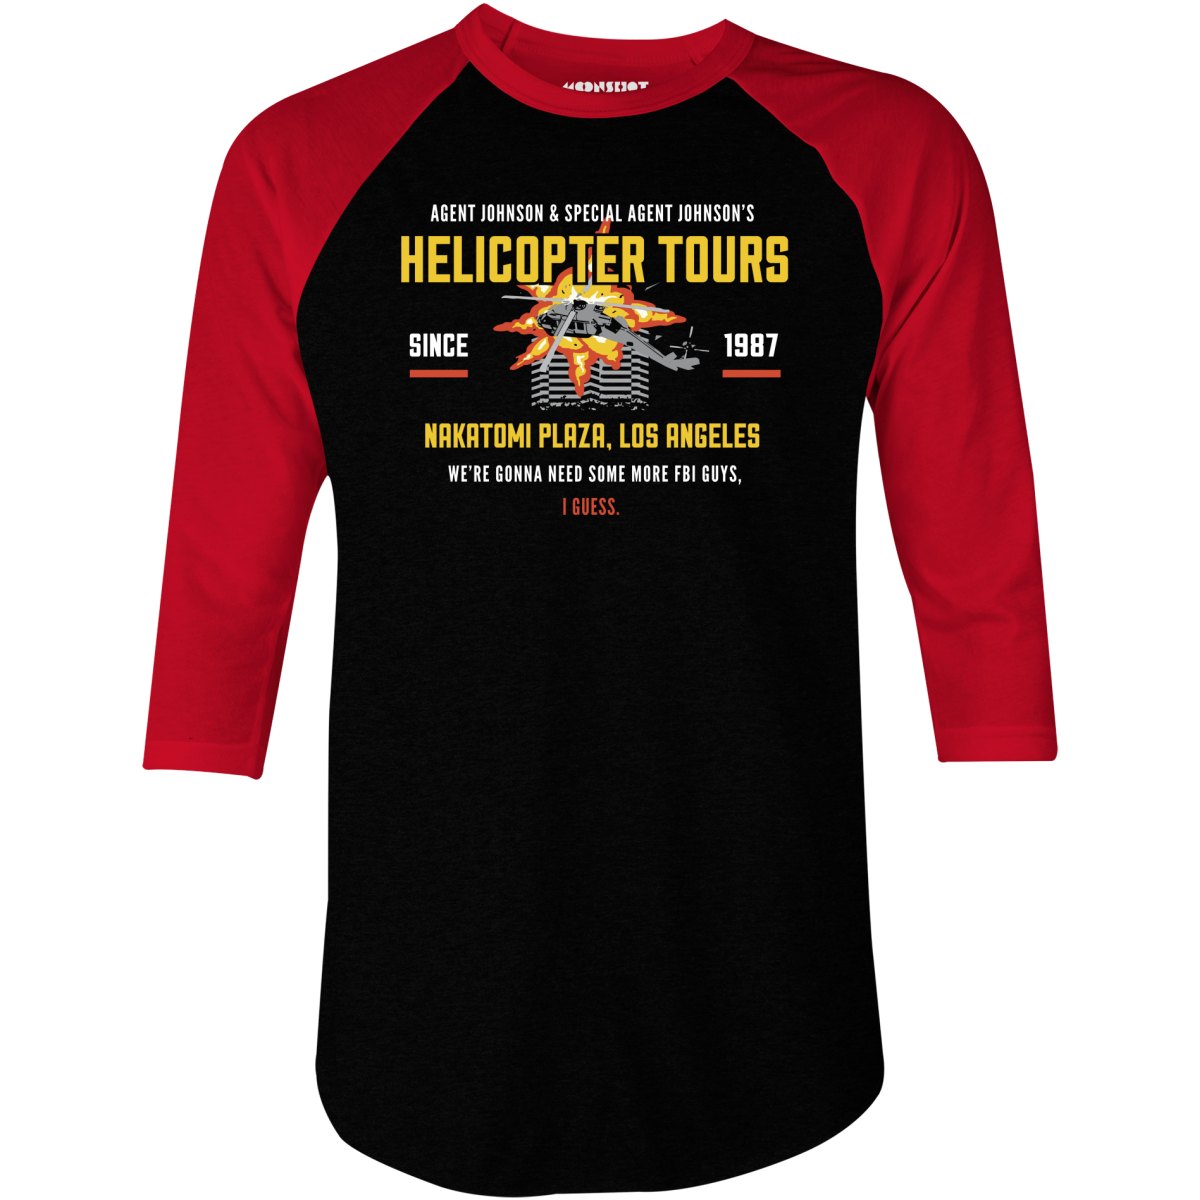 Agent Johnson & Johnson's Helicopter Tours - Die Hard - 3/4 Sleeve Raglan T-Shirt